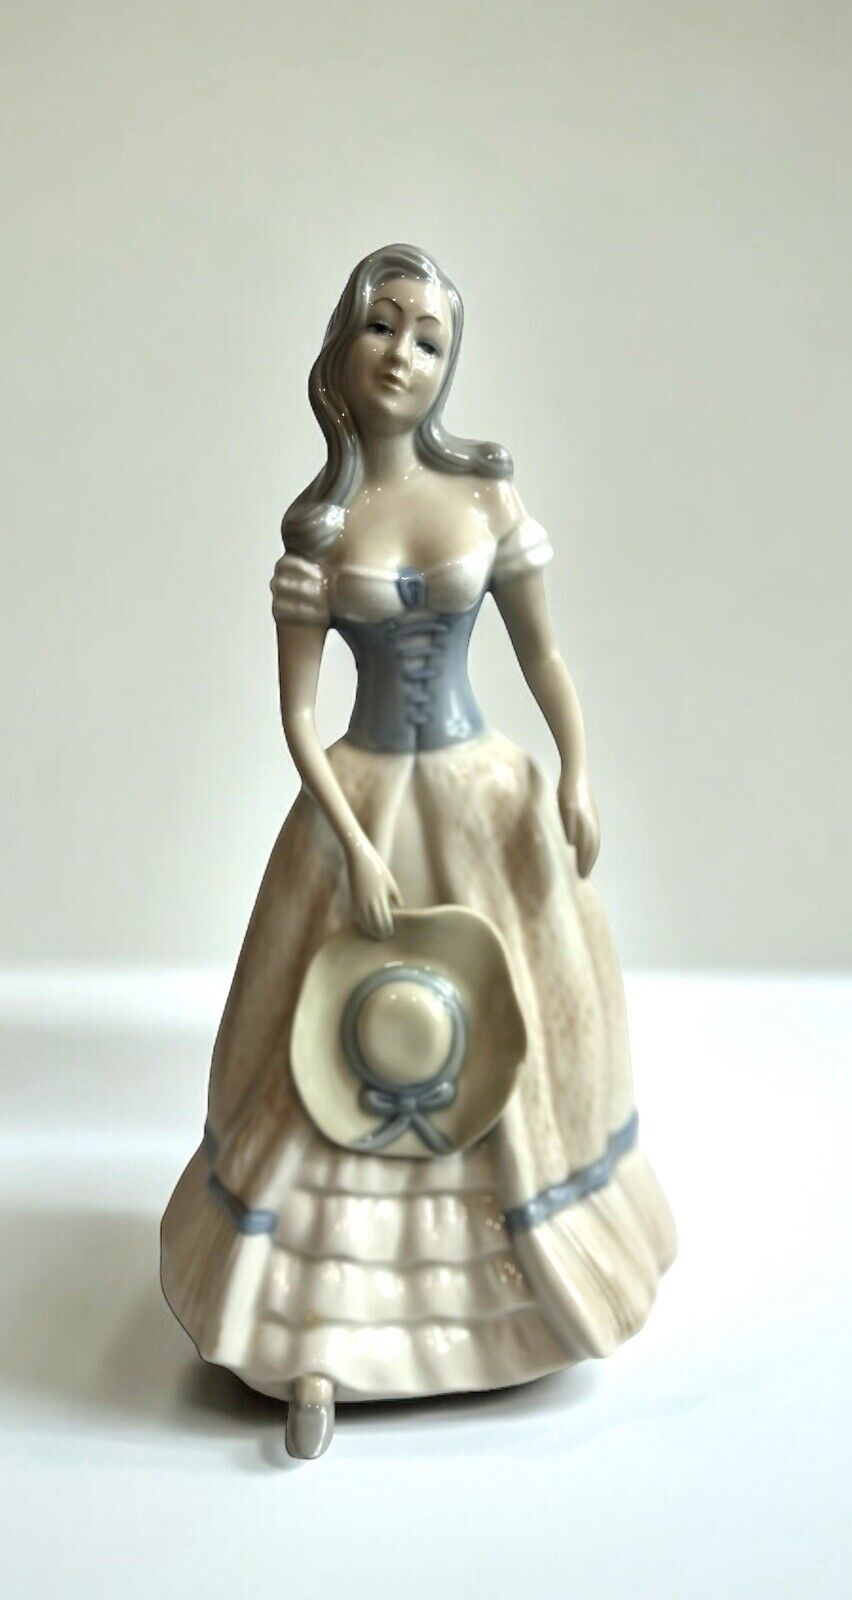 VTG Large Tengra Spain Porcelain Figurine Statue Fancy Spanish Woman Lady